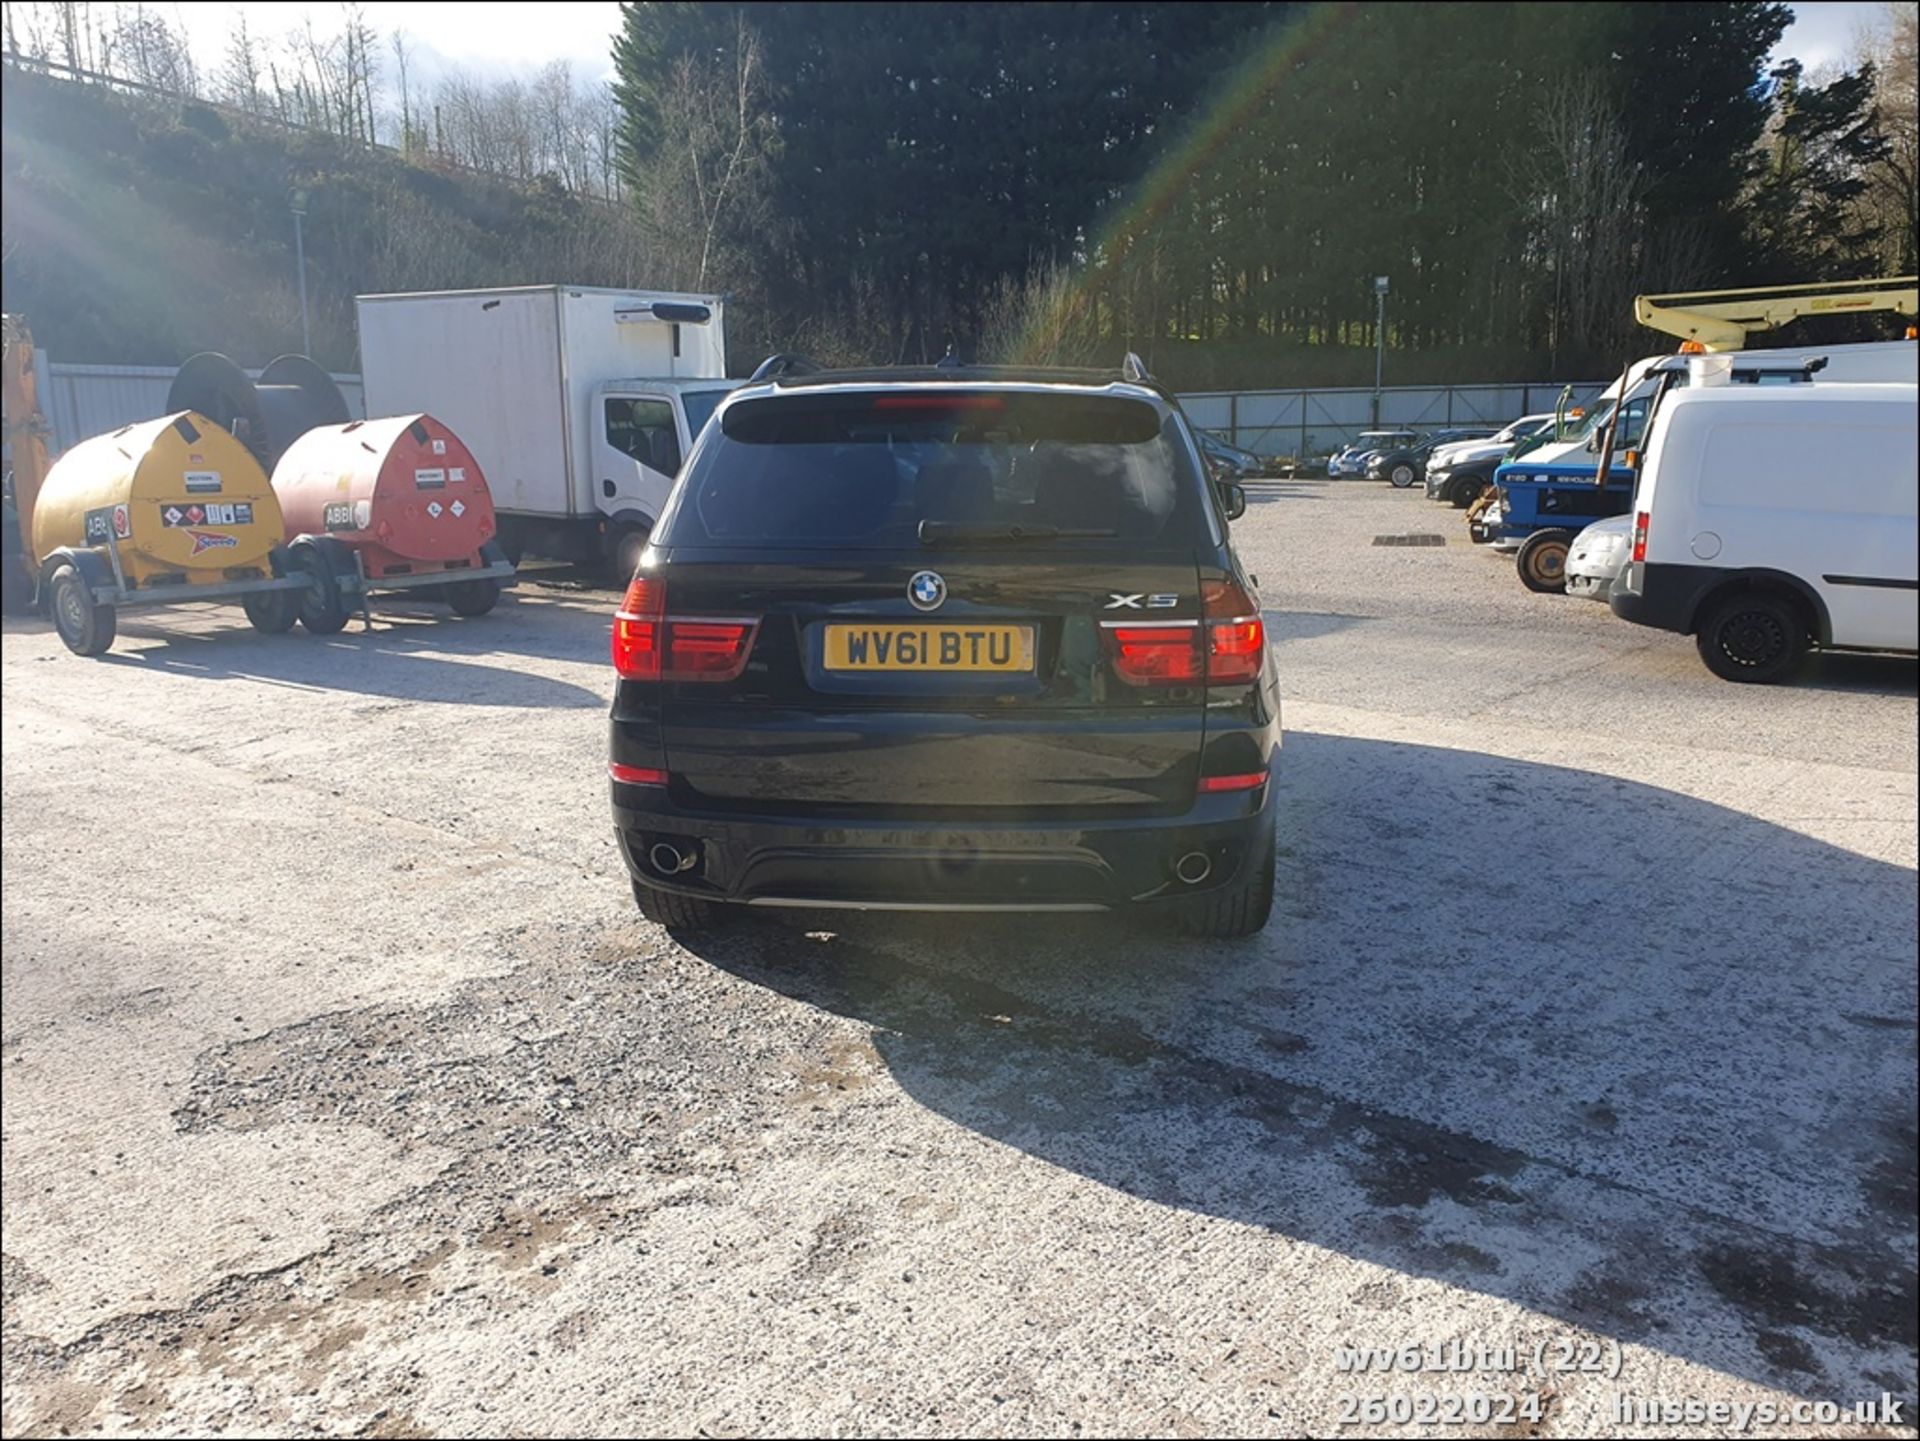 11/61 BMW X5 XDRIVE30D SE AUTO - 2993cc 5dr Estate (Black, 85k) - Image 23 of 51